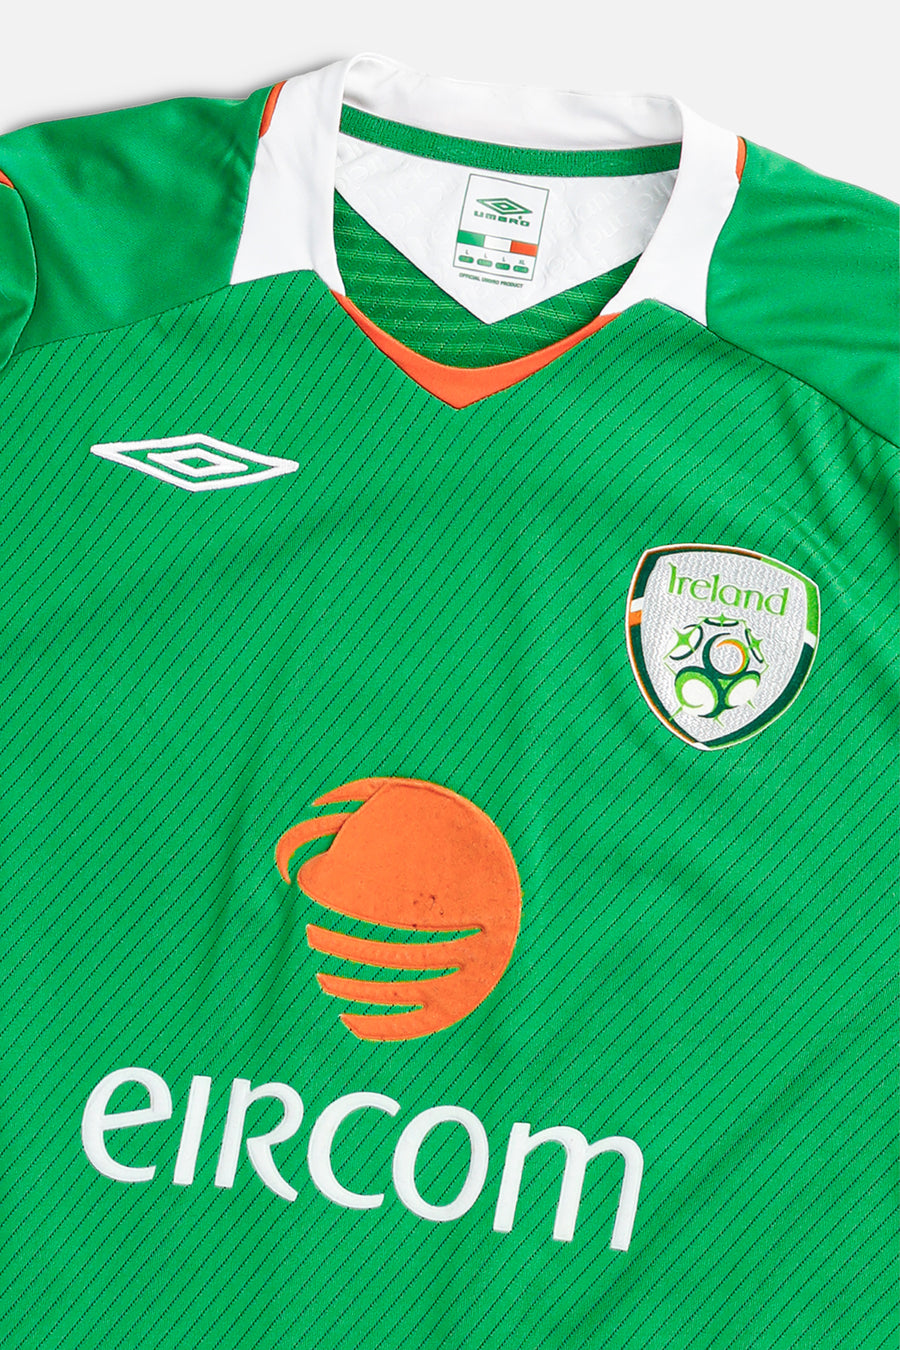 Vintage Ireland Soccer Jersey - L